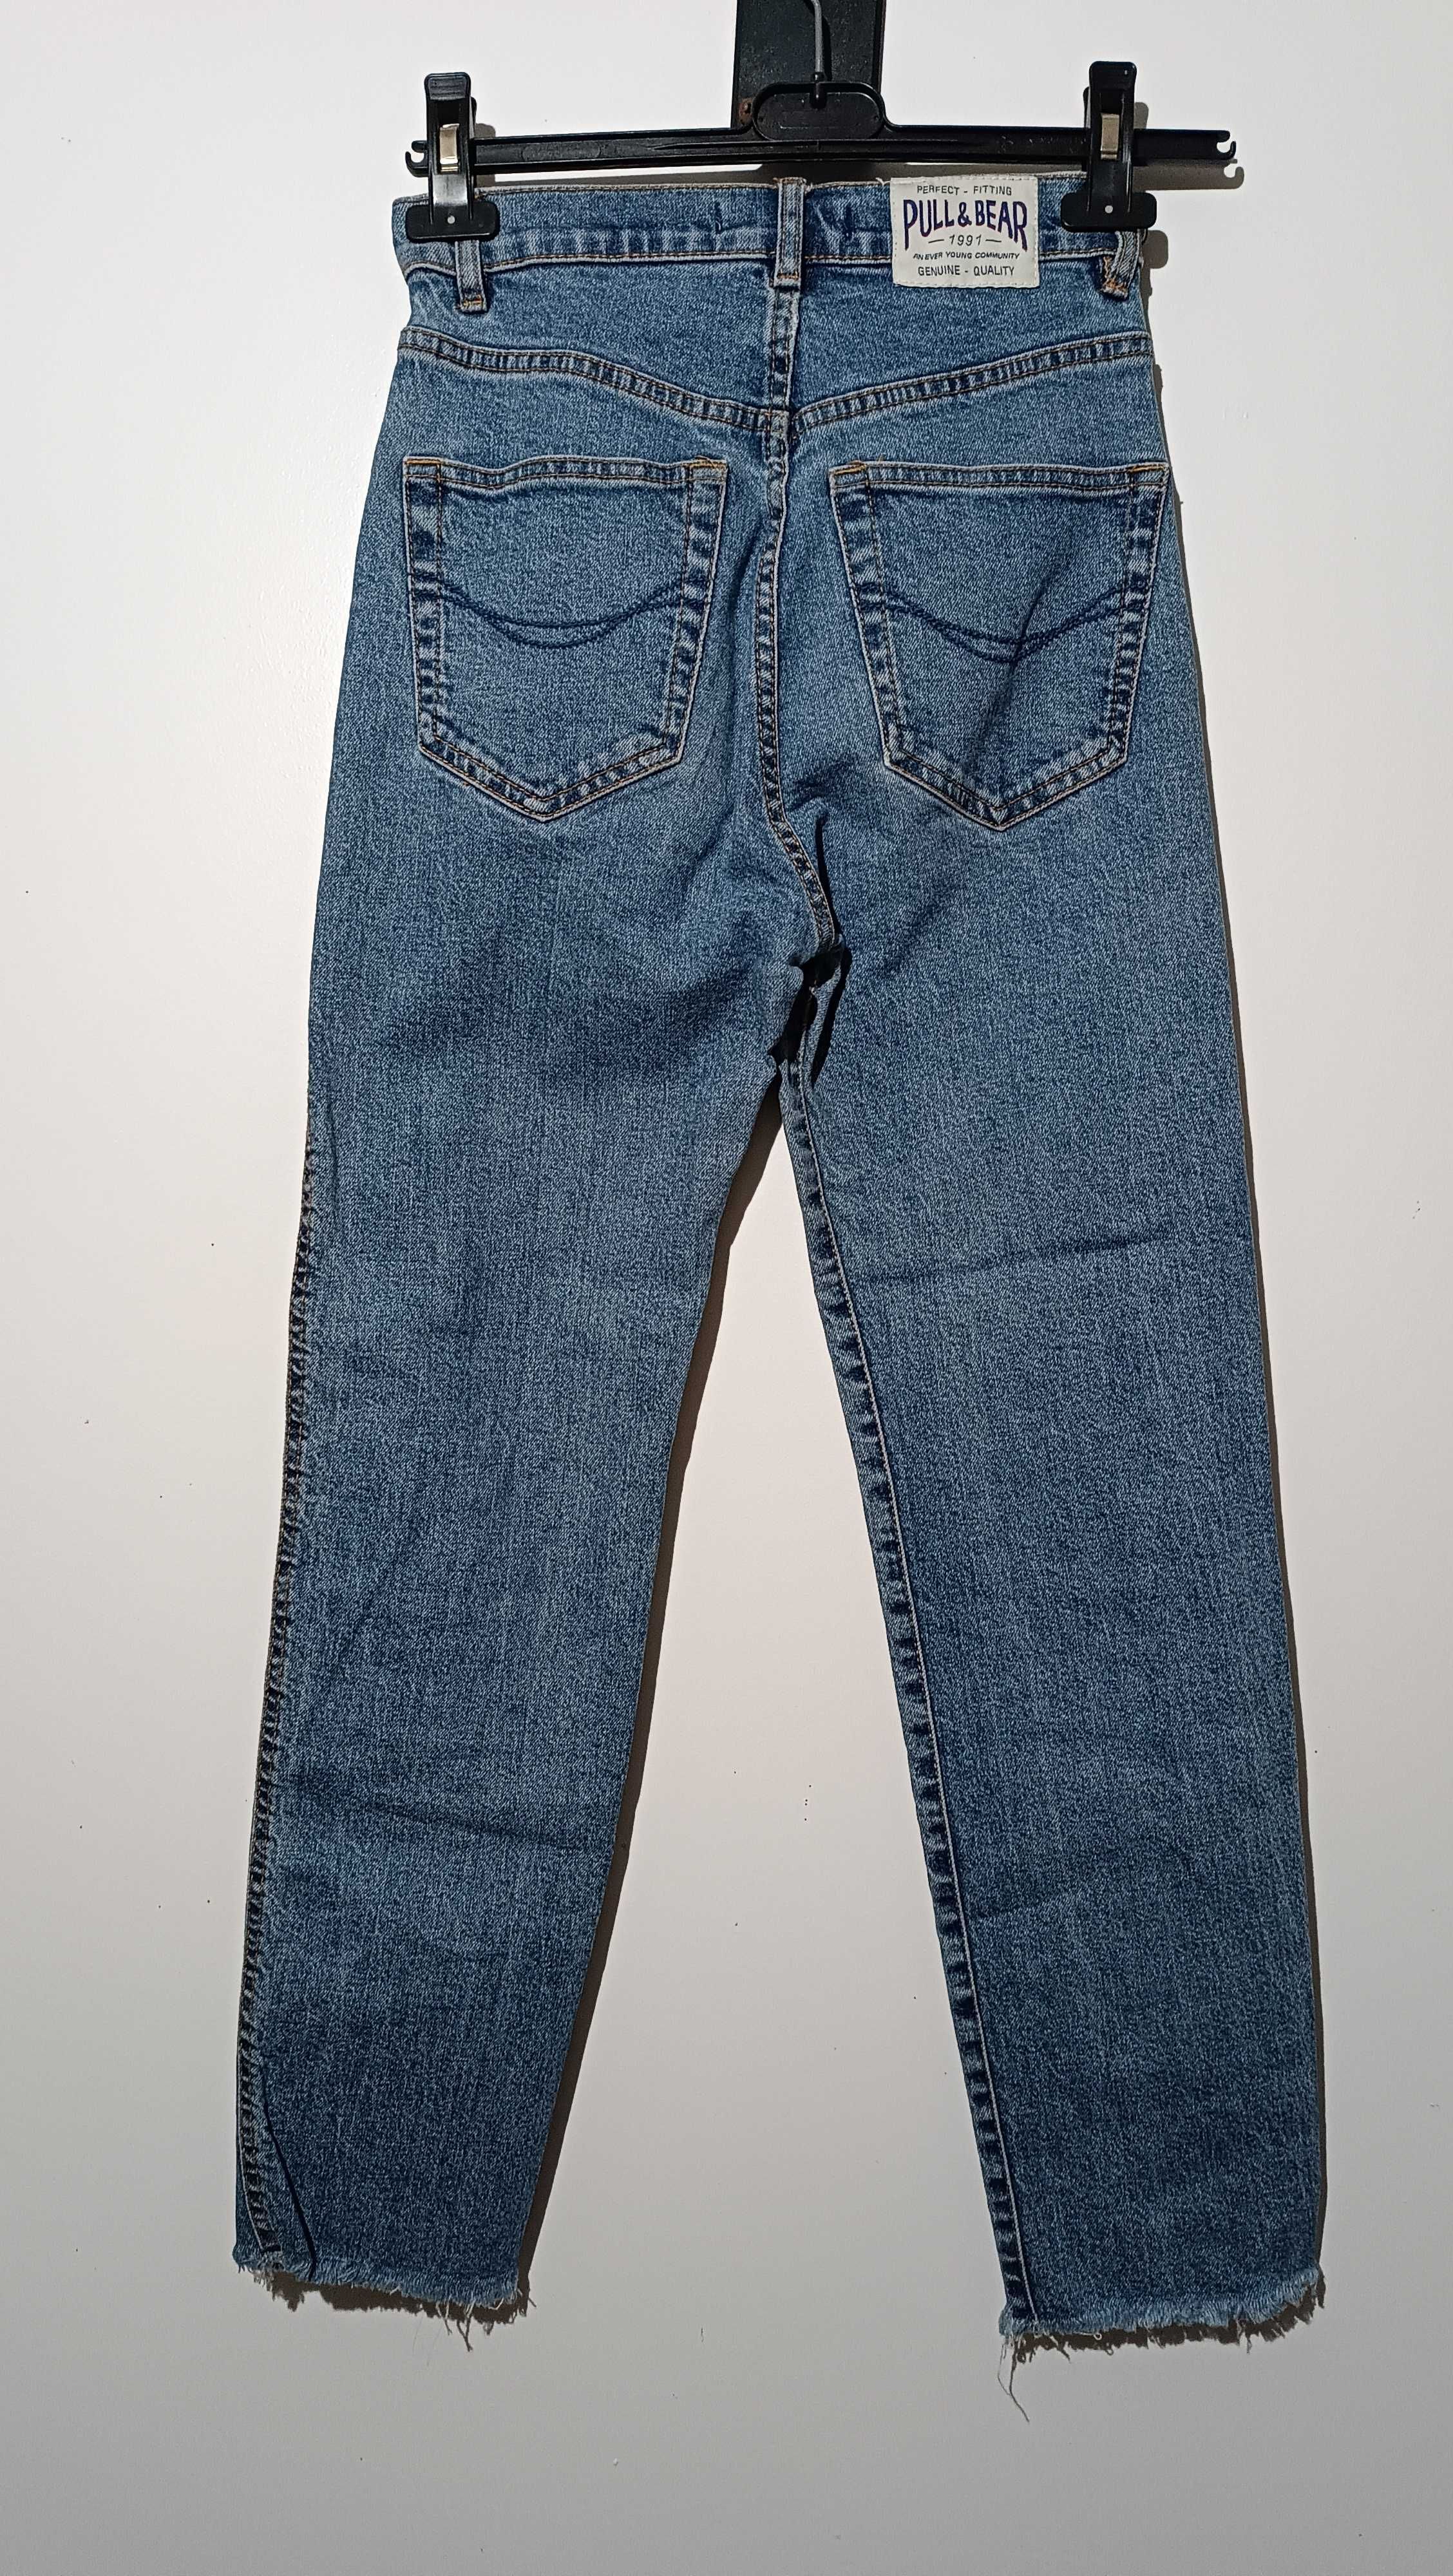 Calças jeans menina/senhora Pull & bear cintura subida, tamanho 32